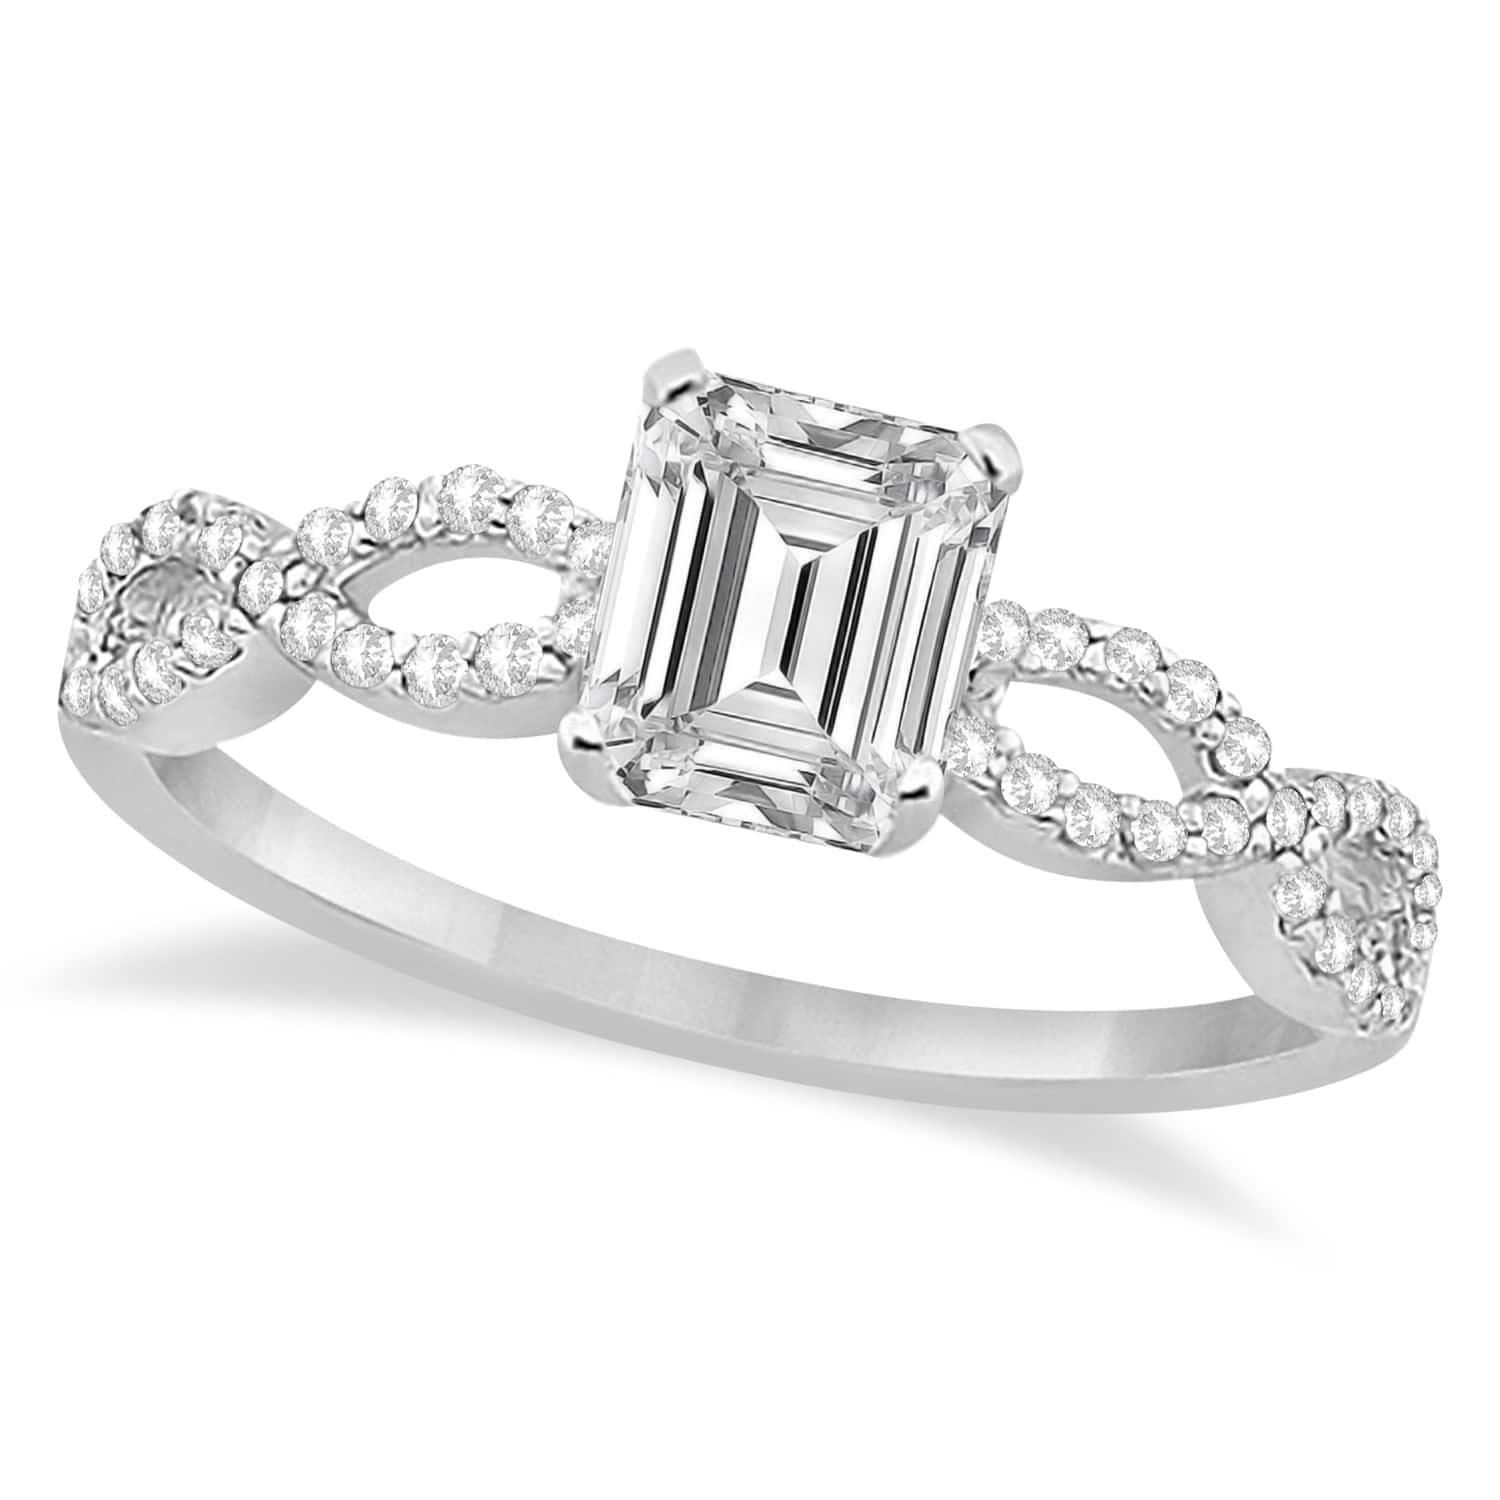 Infinity Emerald-Cut Diamond Engagement Ring 14k White Gold (0.50ct)